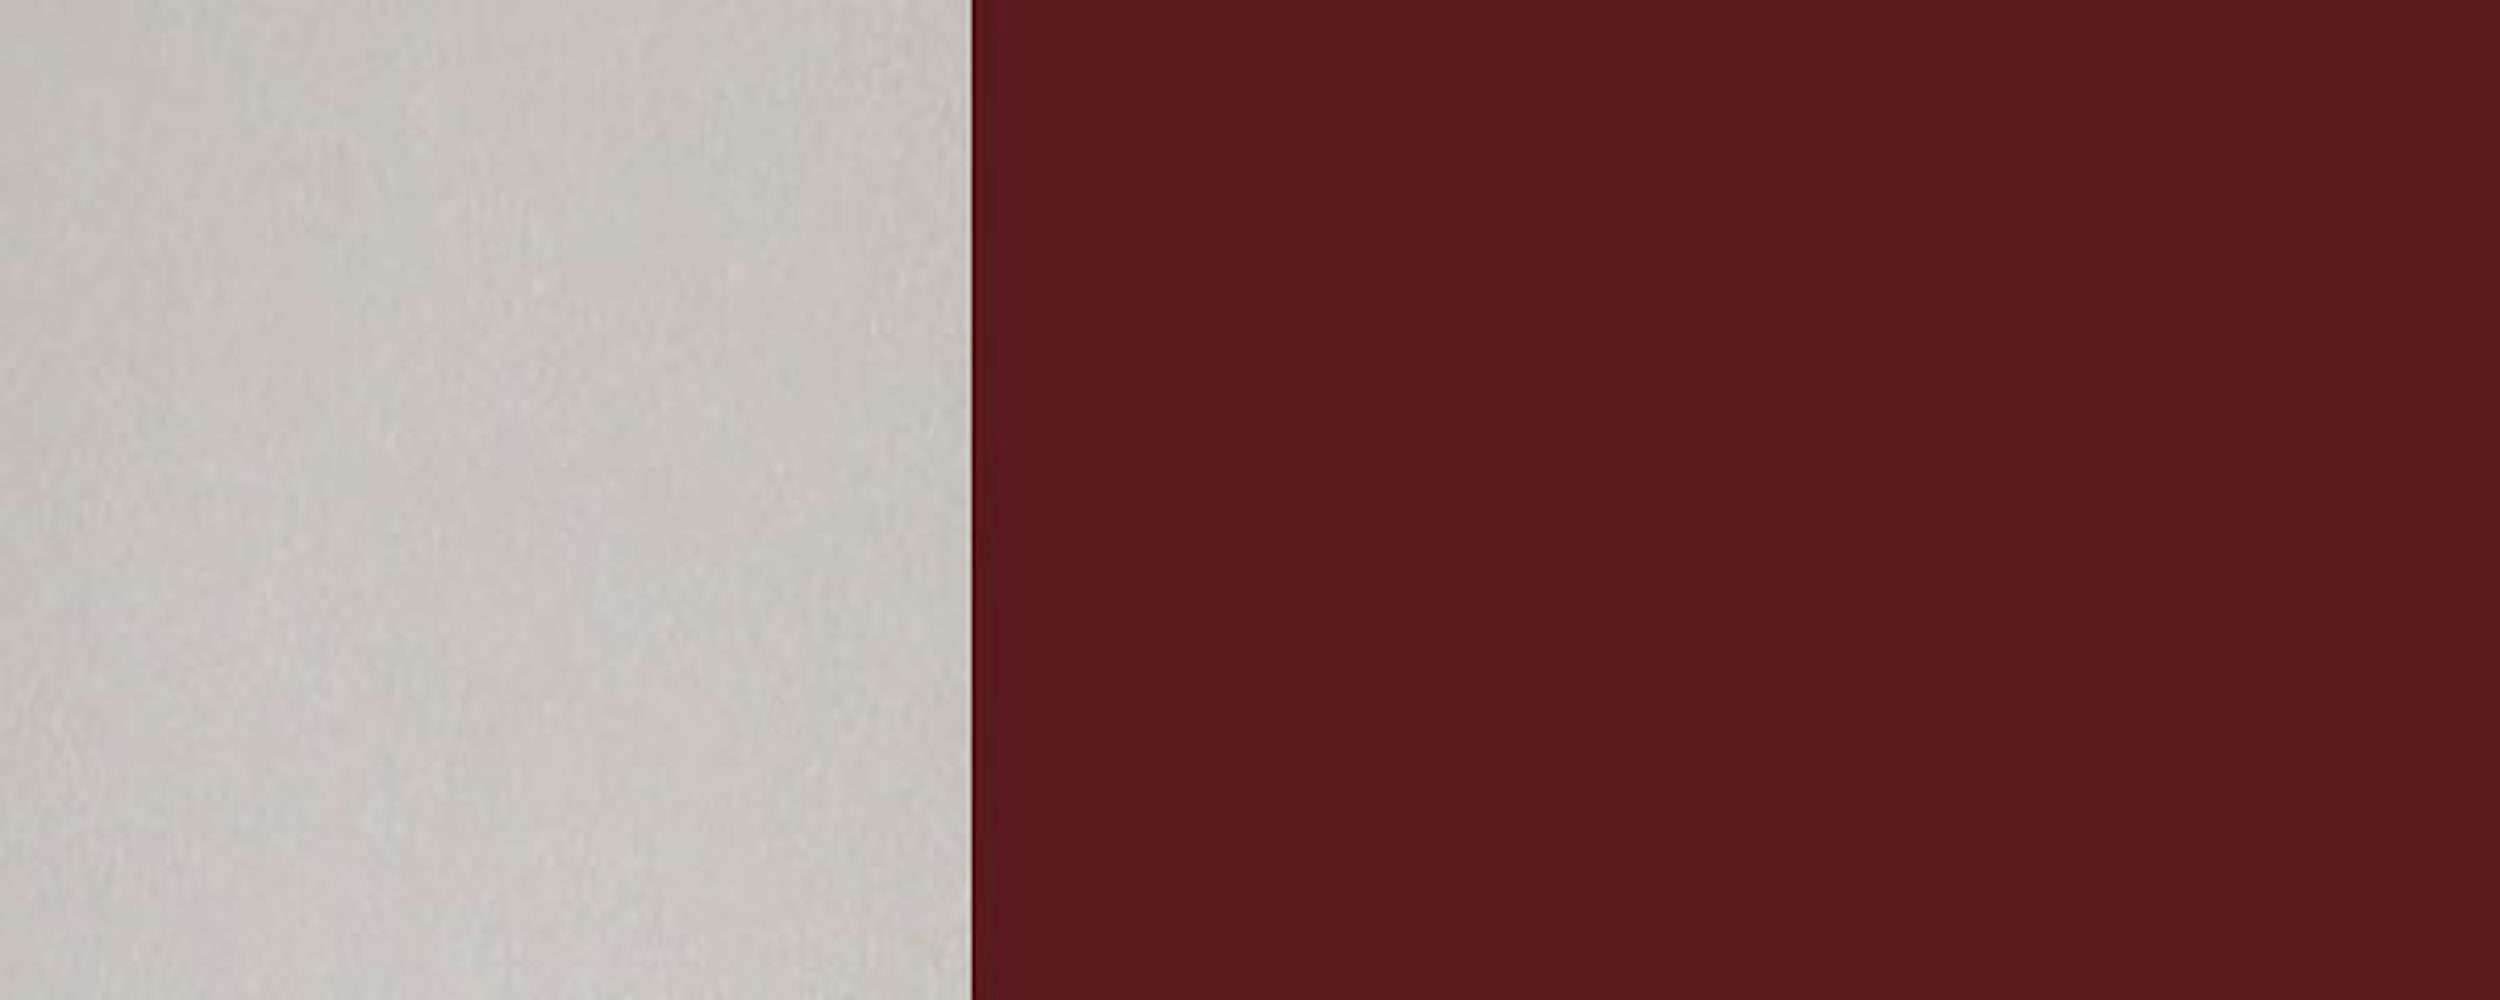 Feldmann-Wohnen Klapphängeschrank Tivoli (Tivoli) 45cm RAL matt 3005 1-türig wählbar weinrot Korpusfarbe und Front